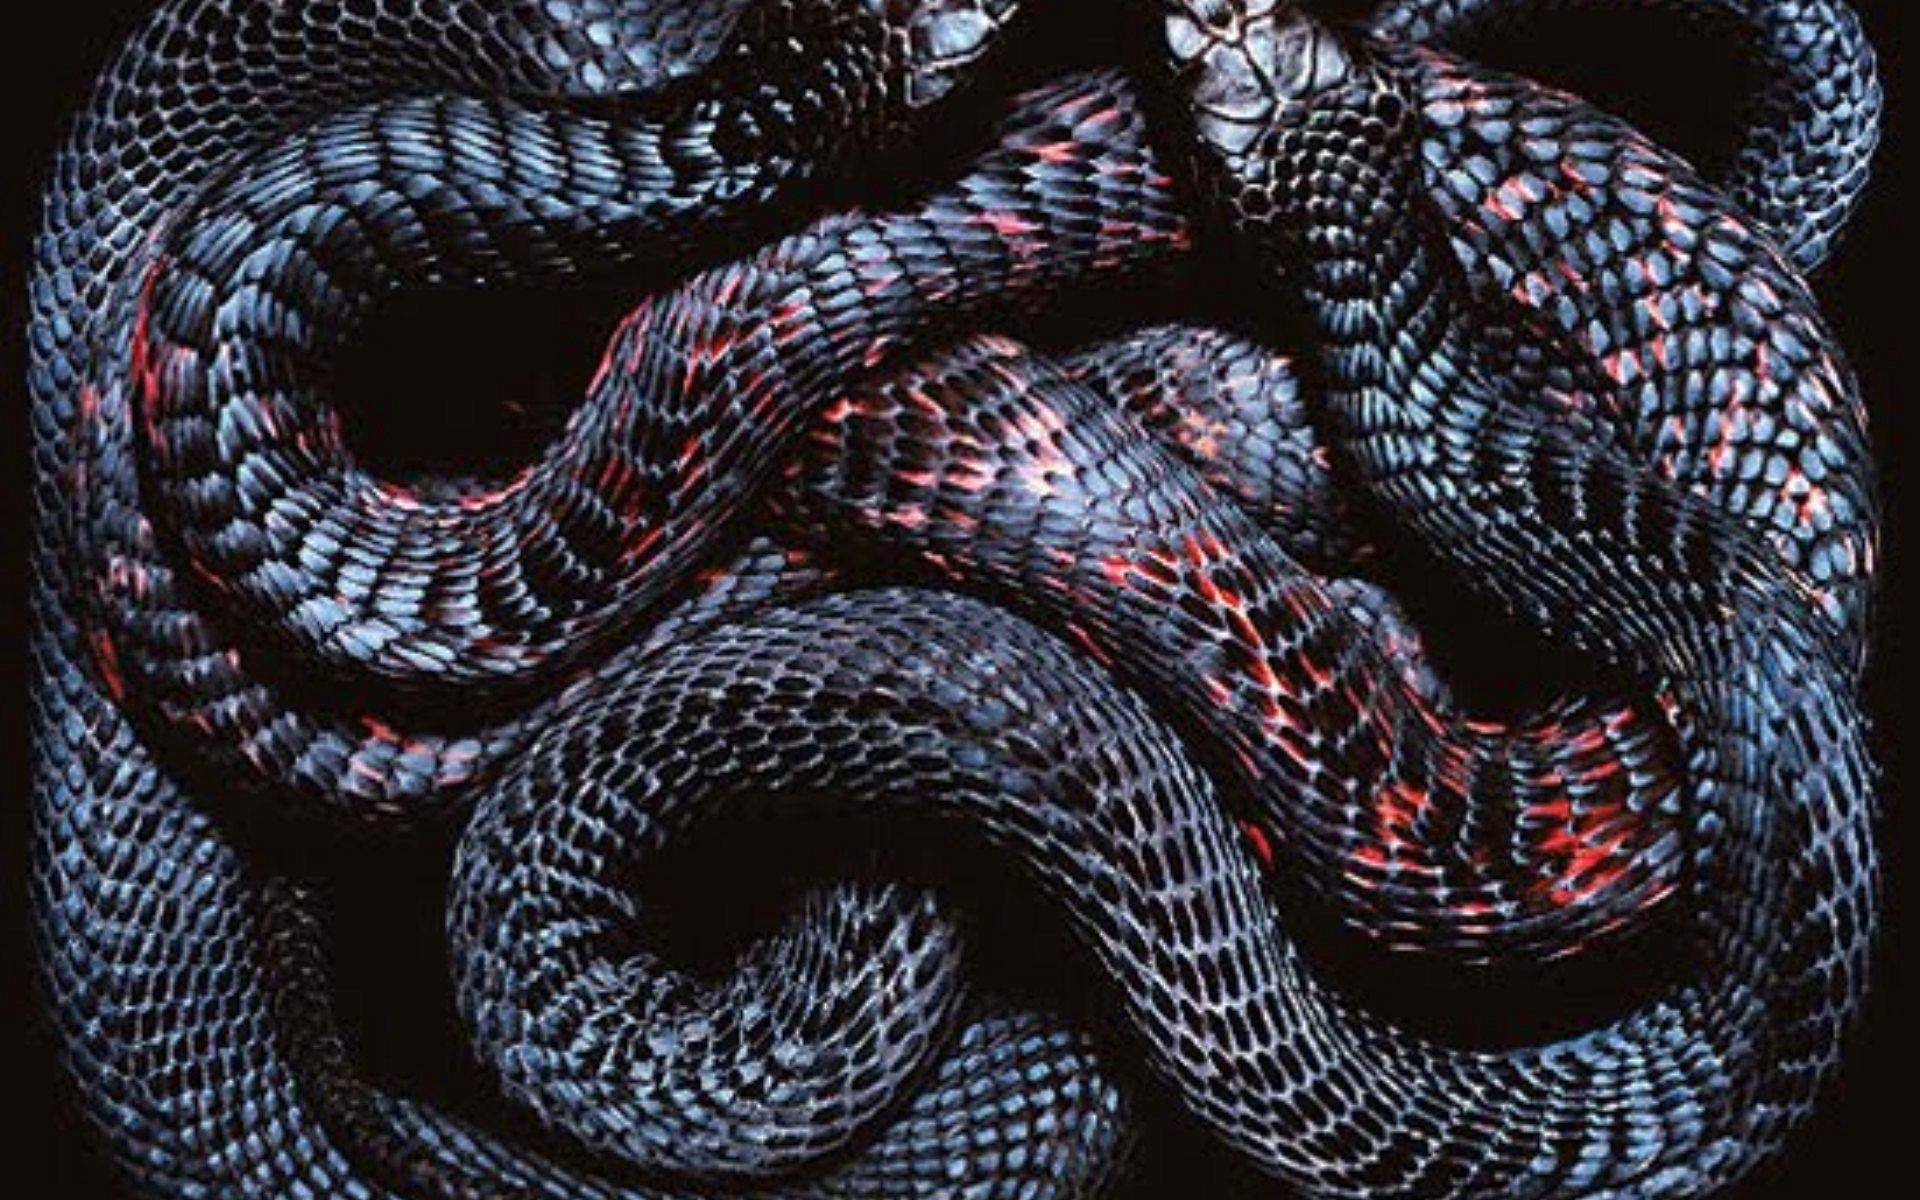 Desktop snakes wallpaper HD download